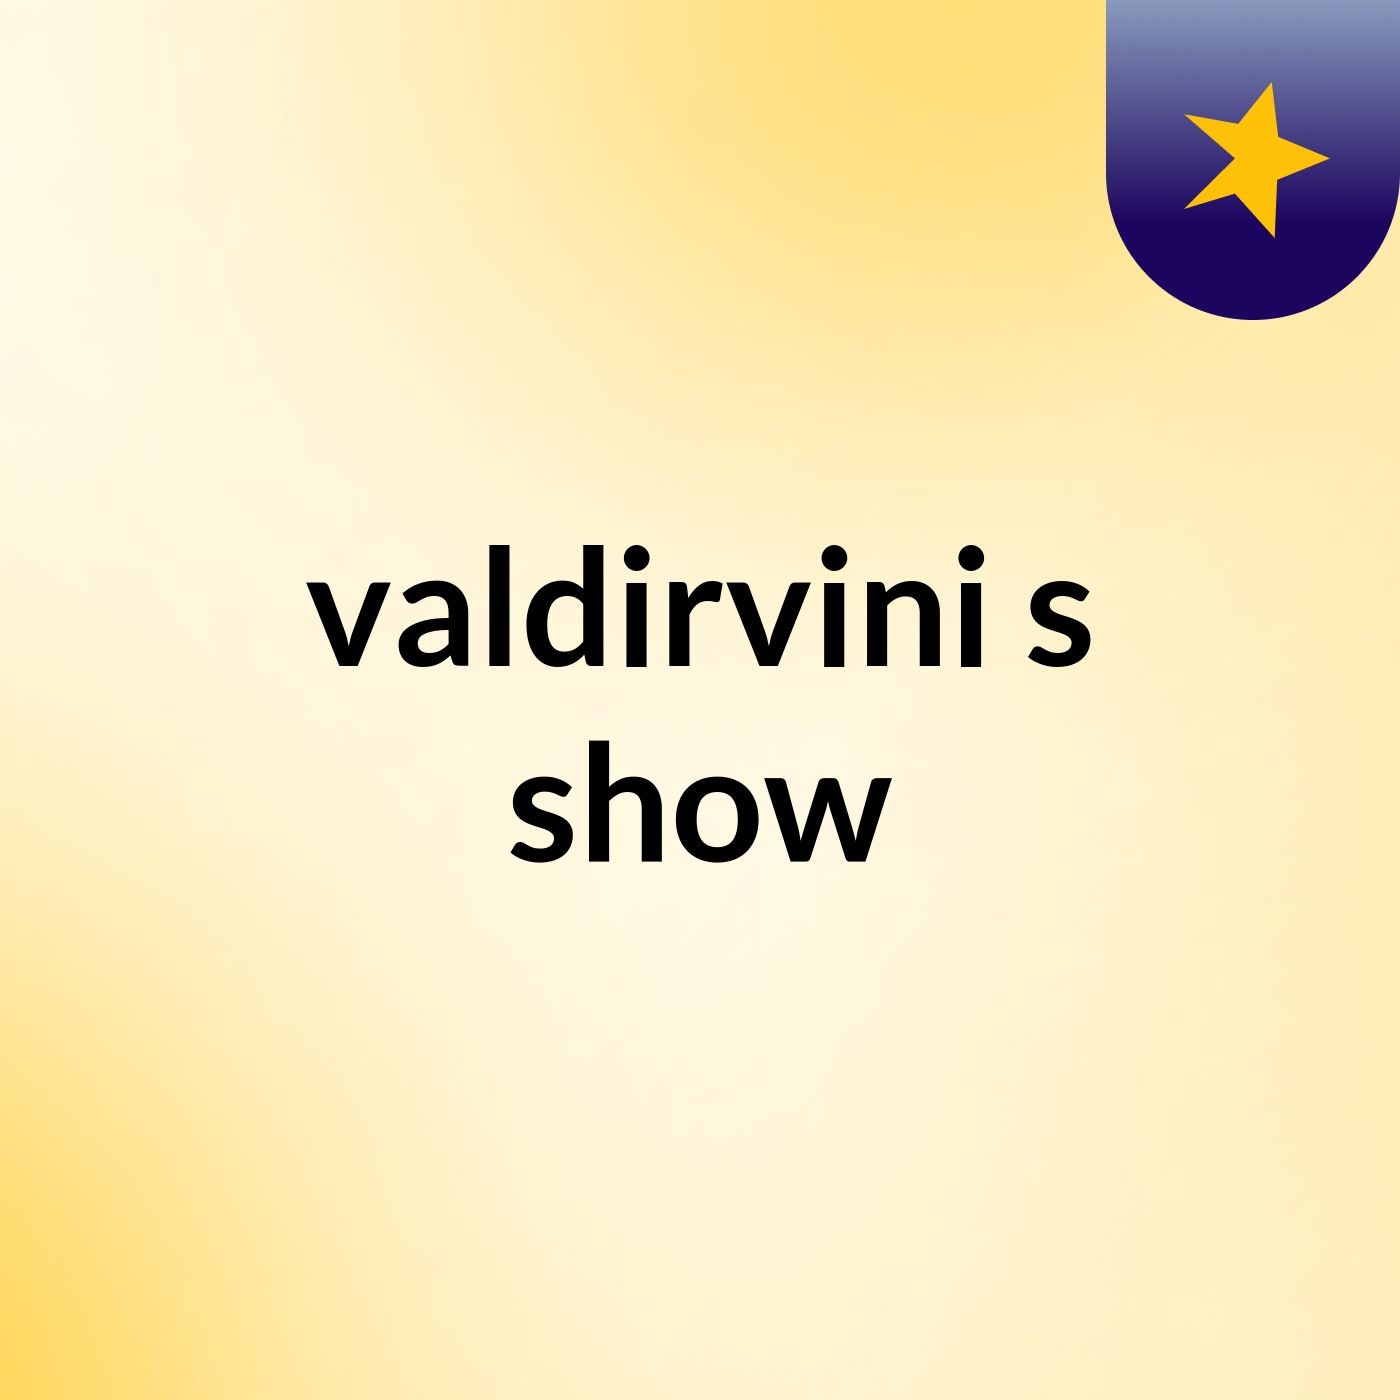 valdirvini's show